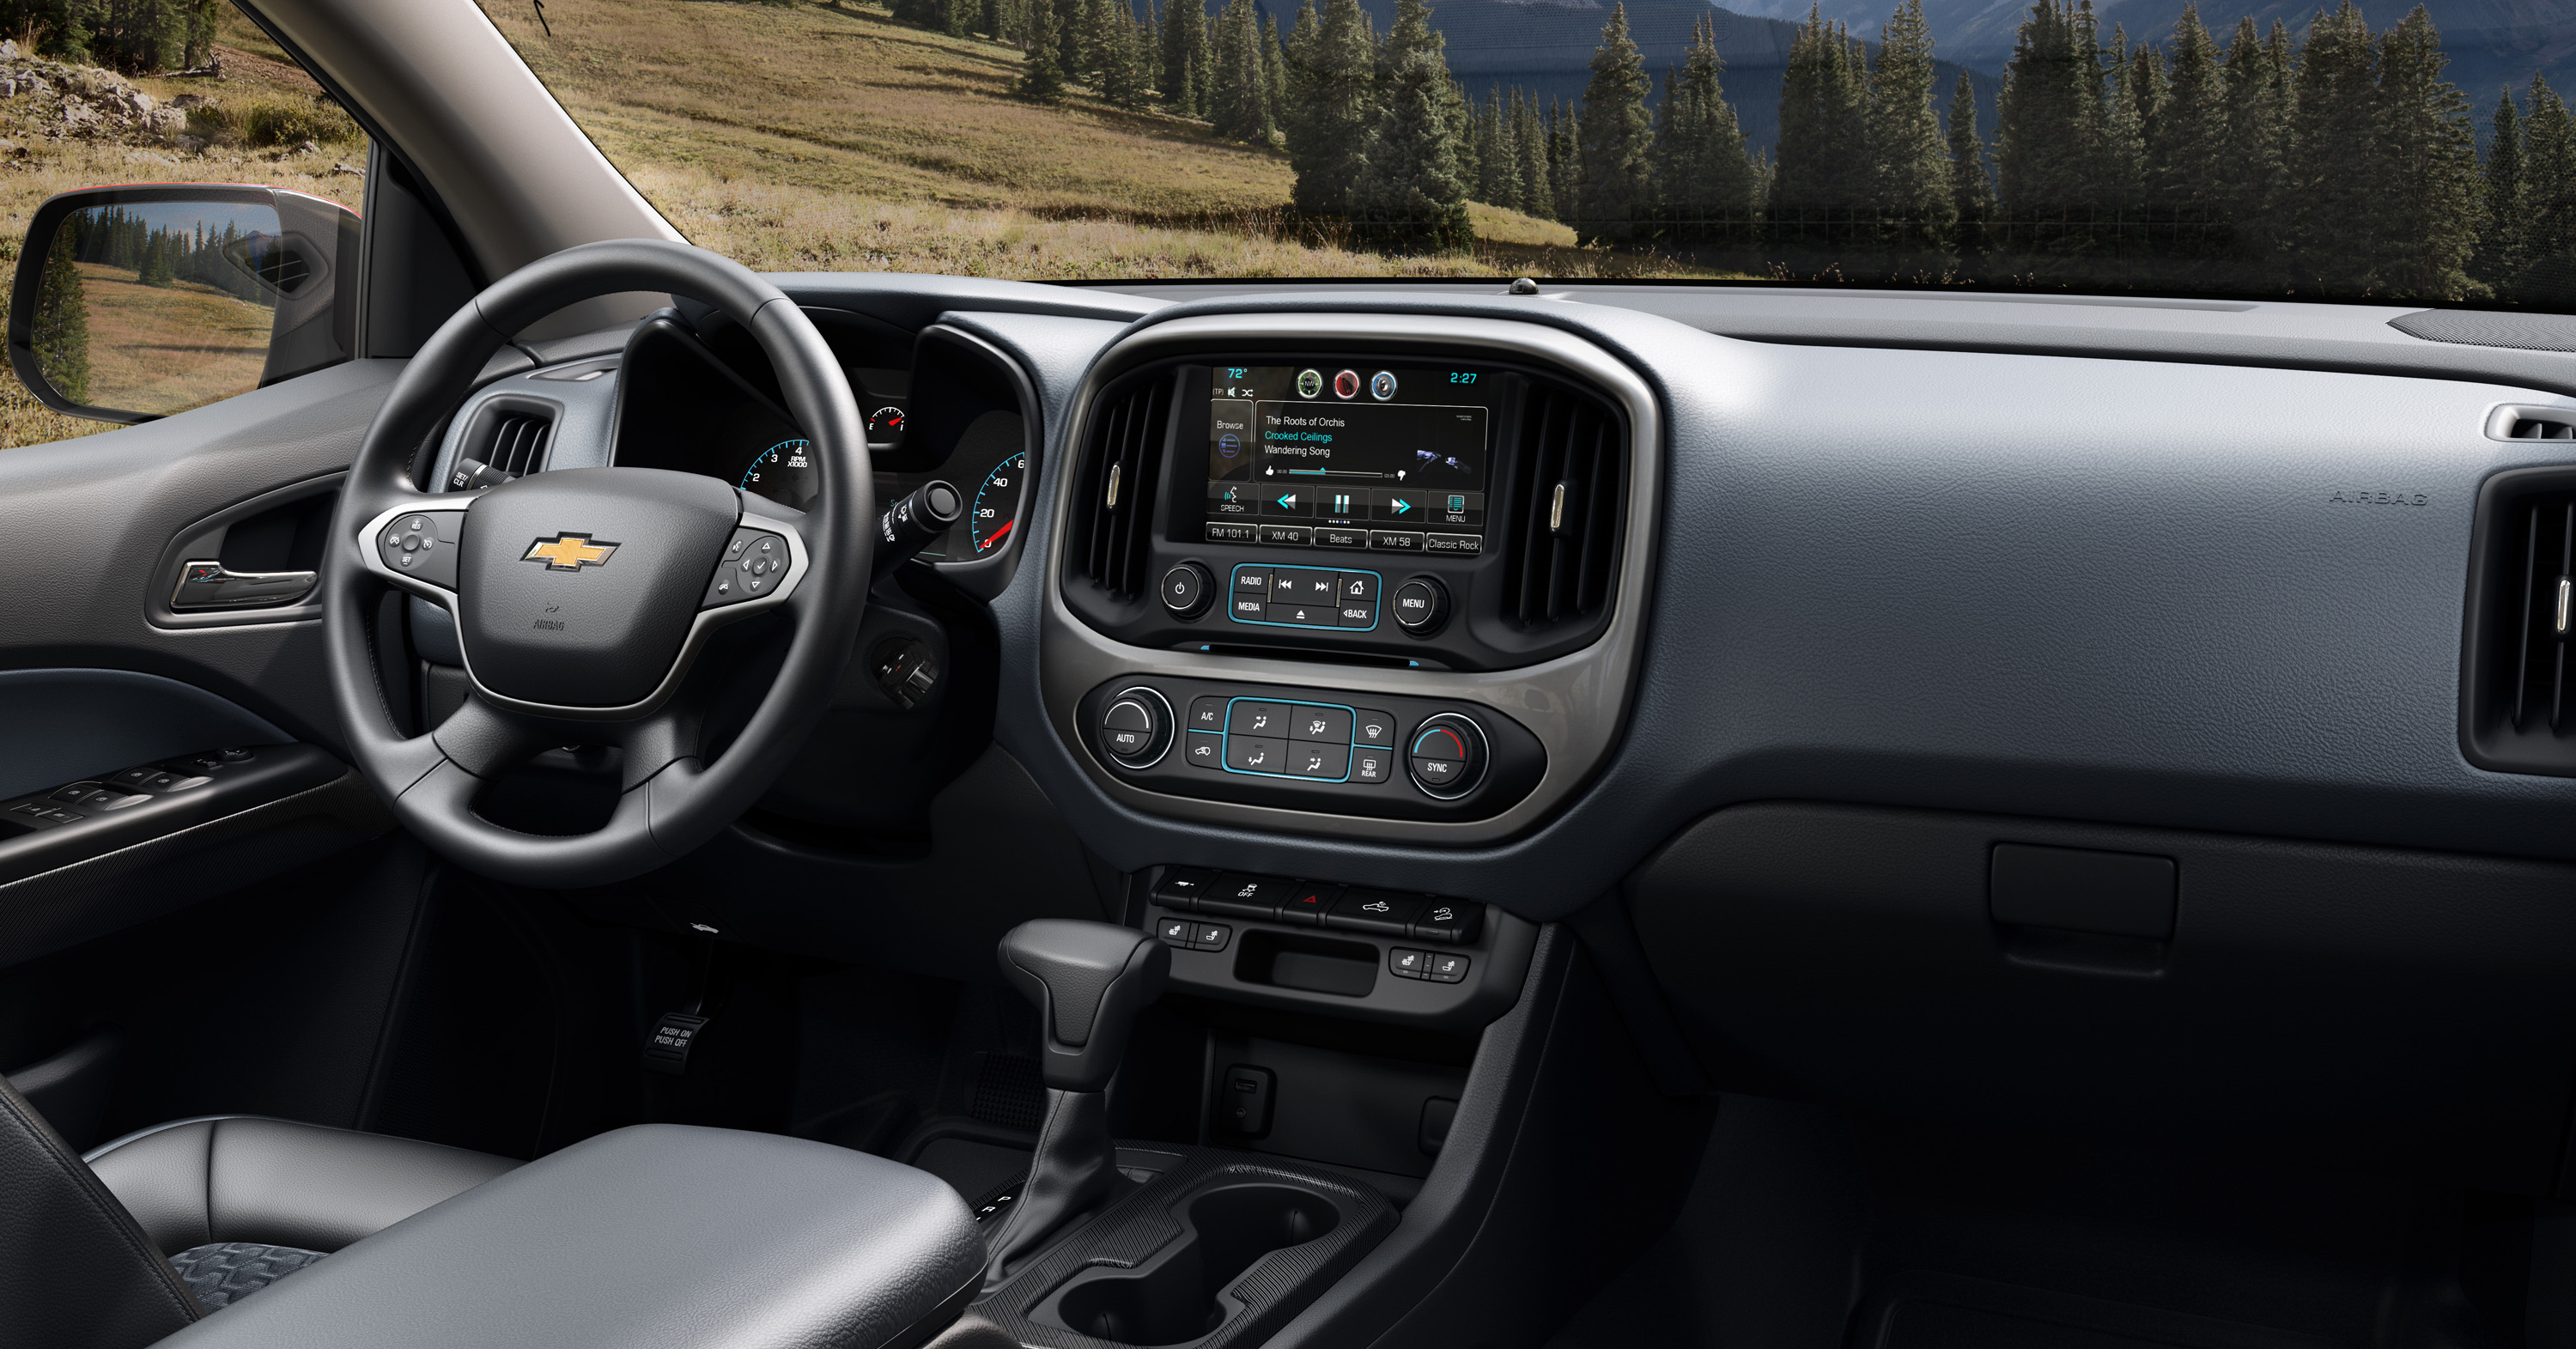 2015 Chevrolet Colorado Interior The Intelligent Driver